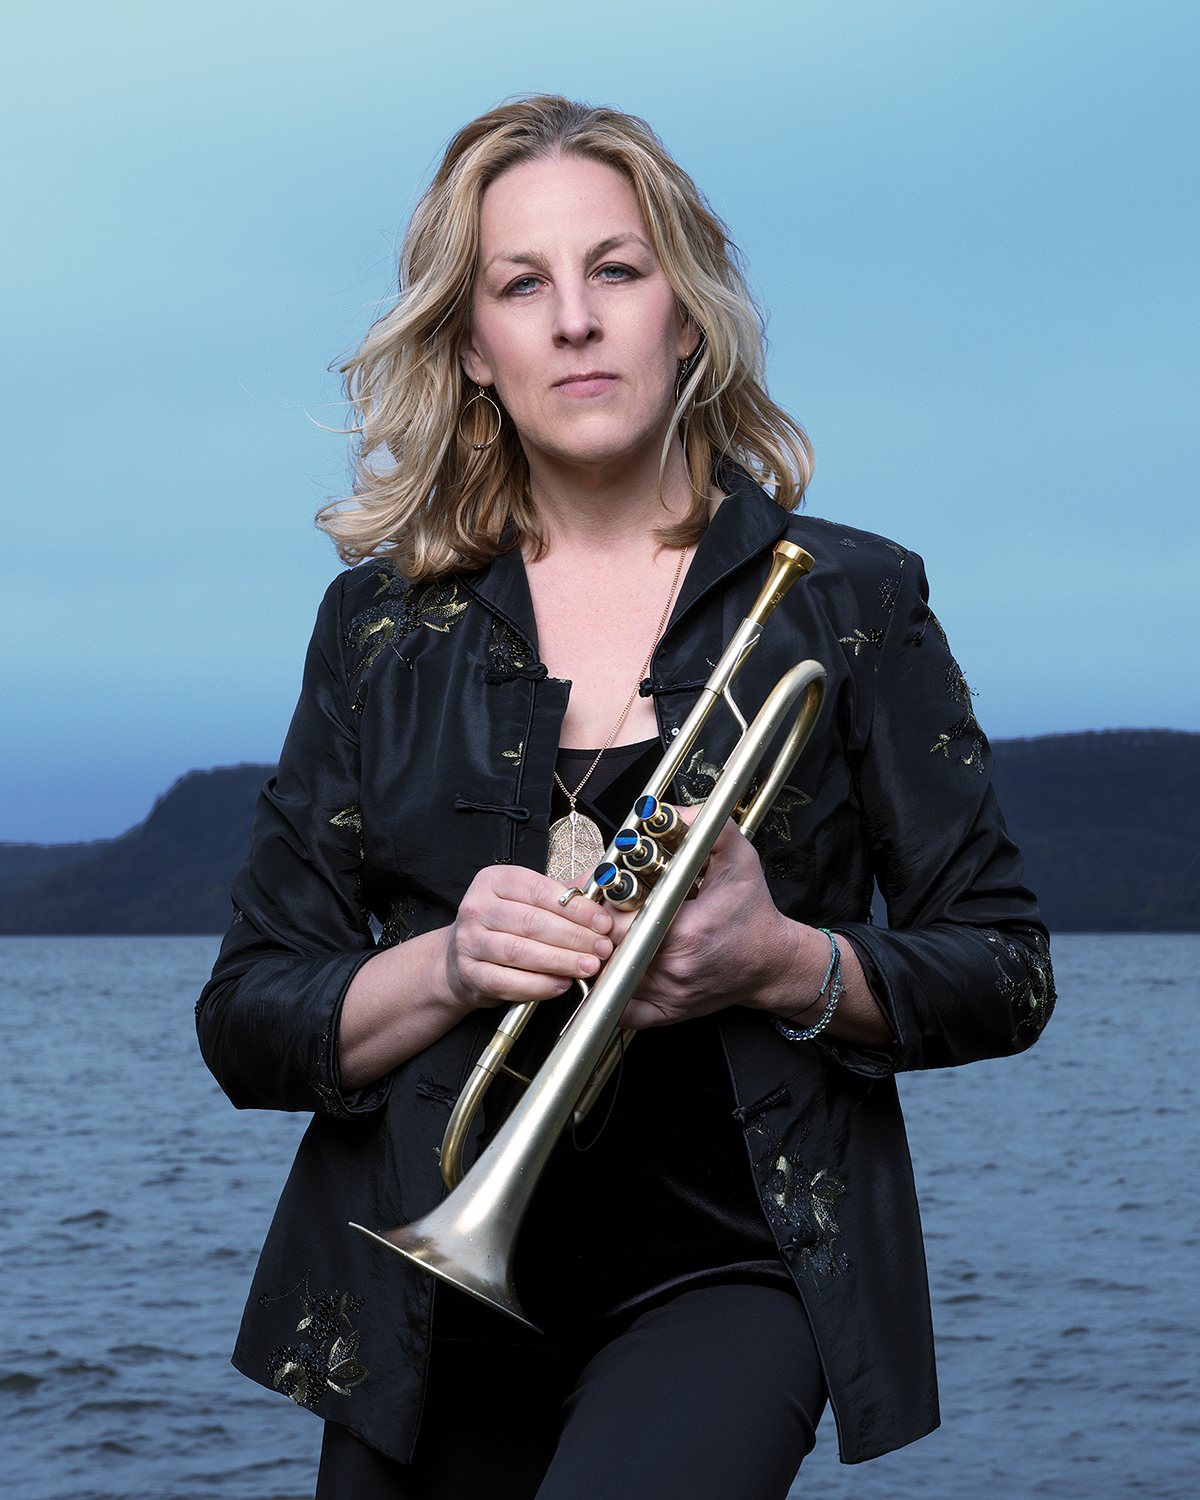 Ingrid Jensen holding a trumpet